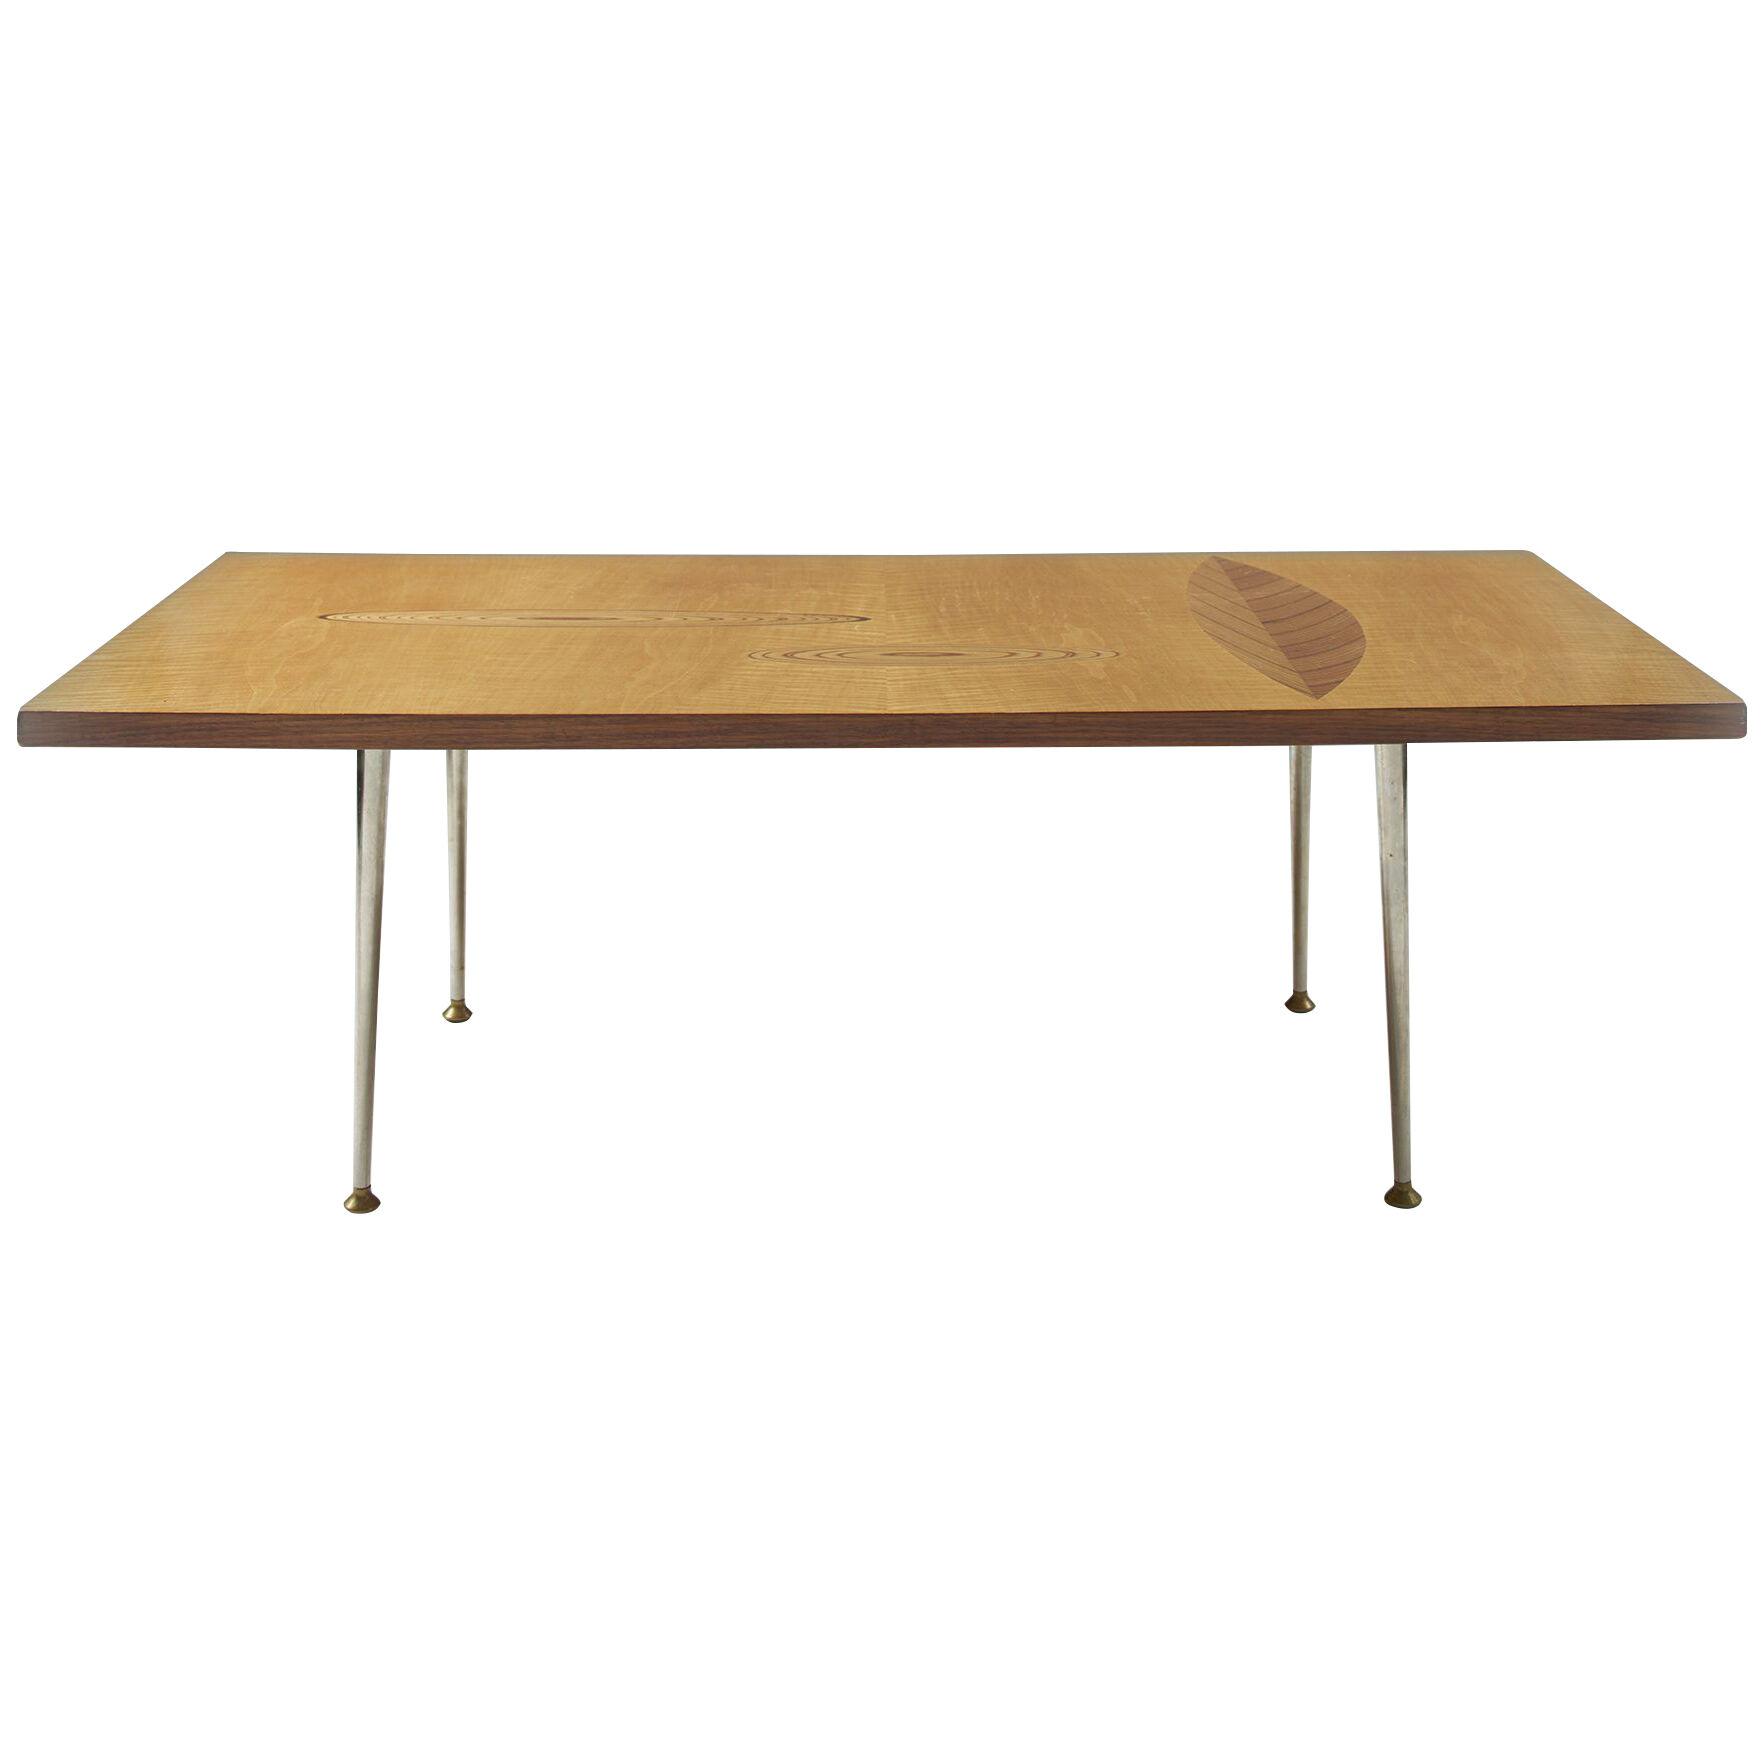 Occasional table “Rhythmic Plywood” model 9015 designed by Tapio Wirkkala